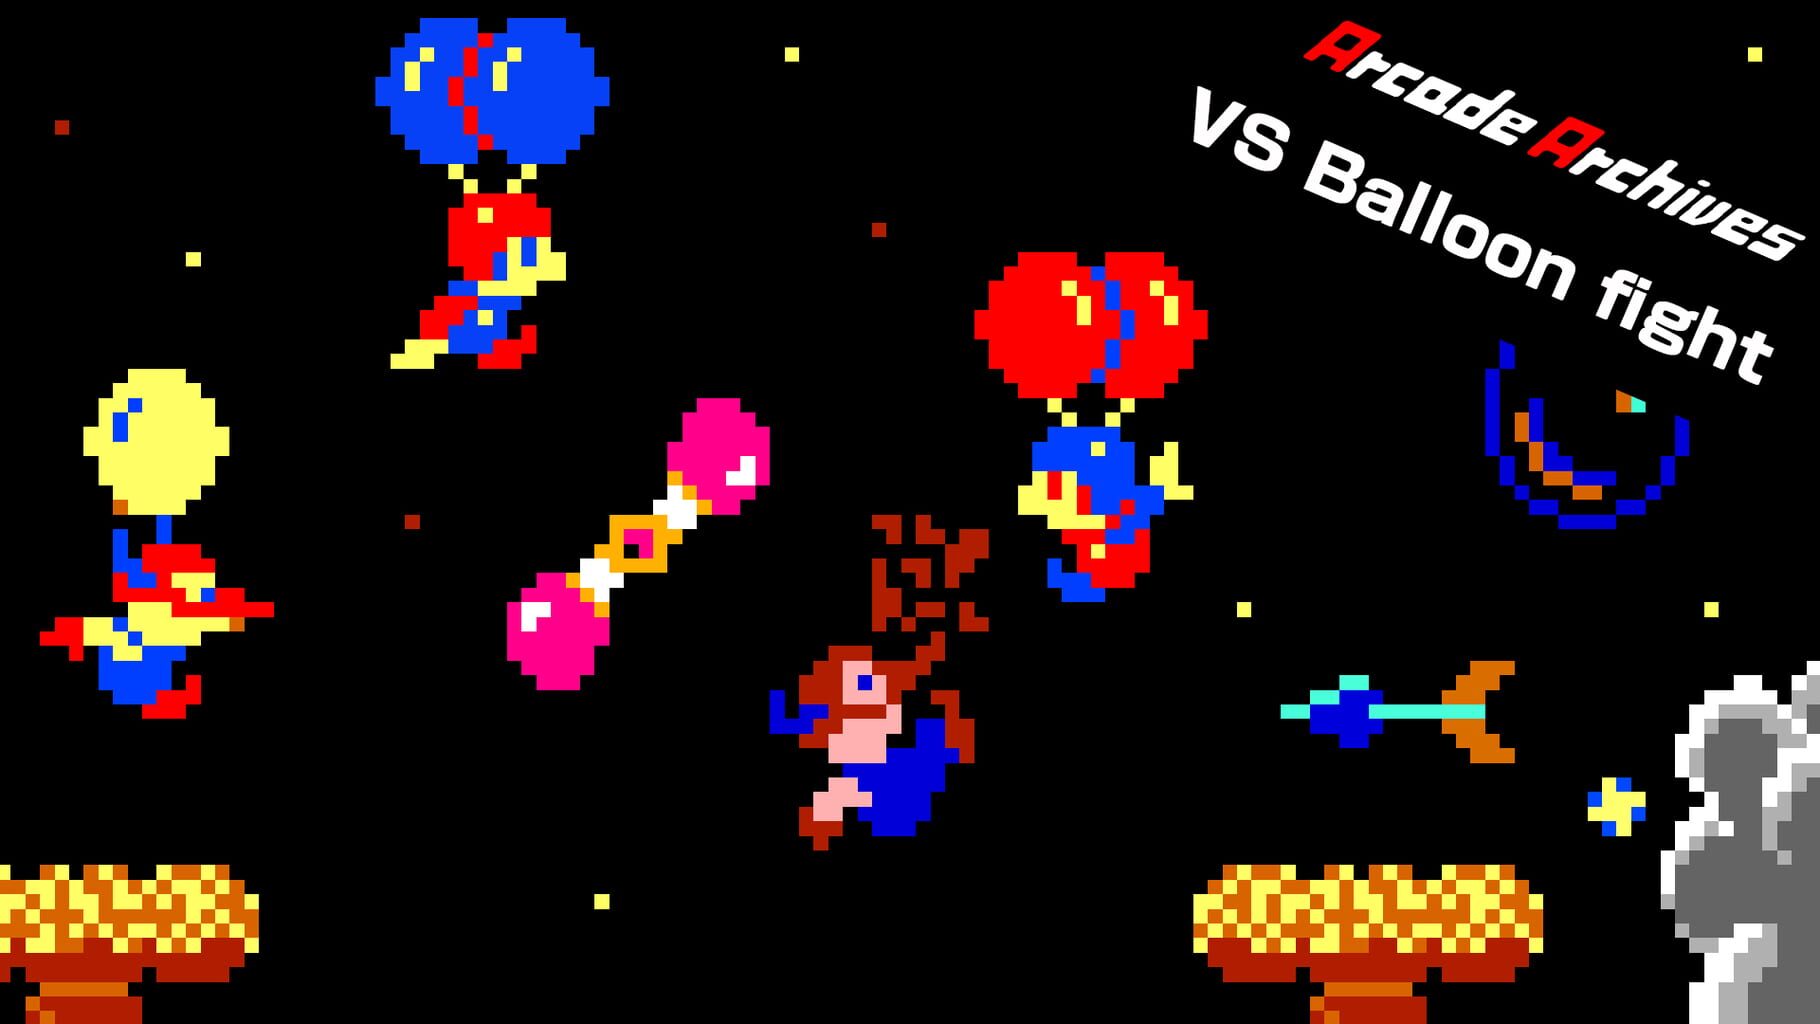 Arcade Archives: Vs. Balloon Fight artwork